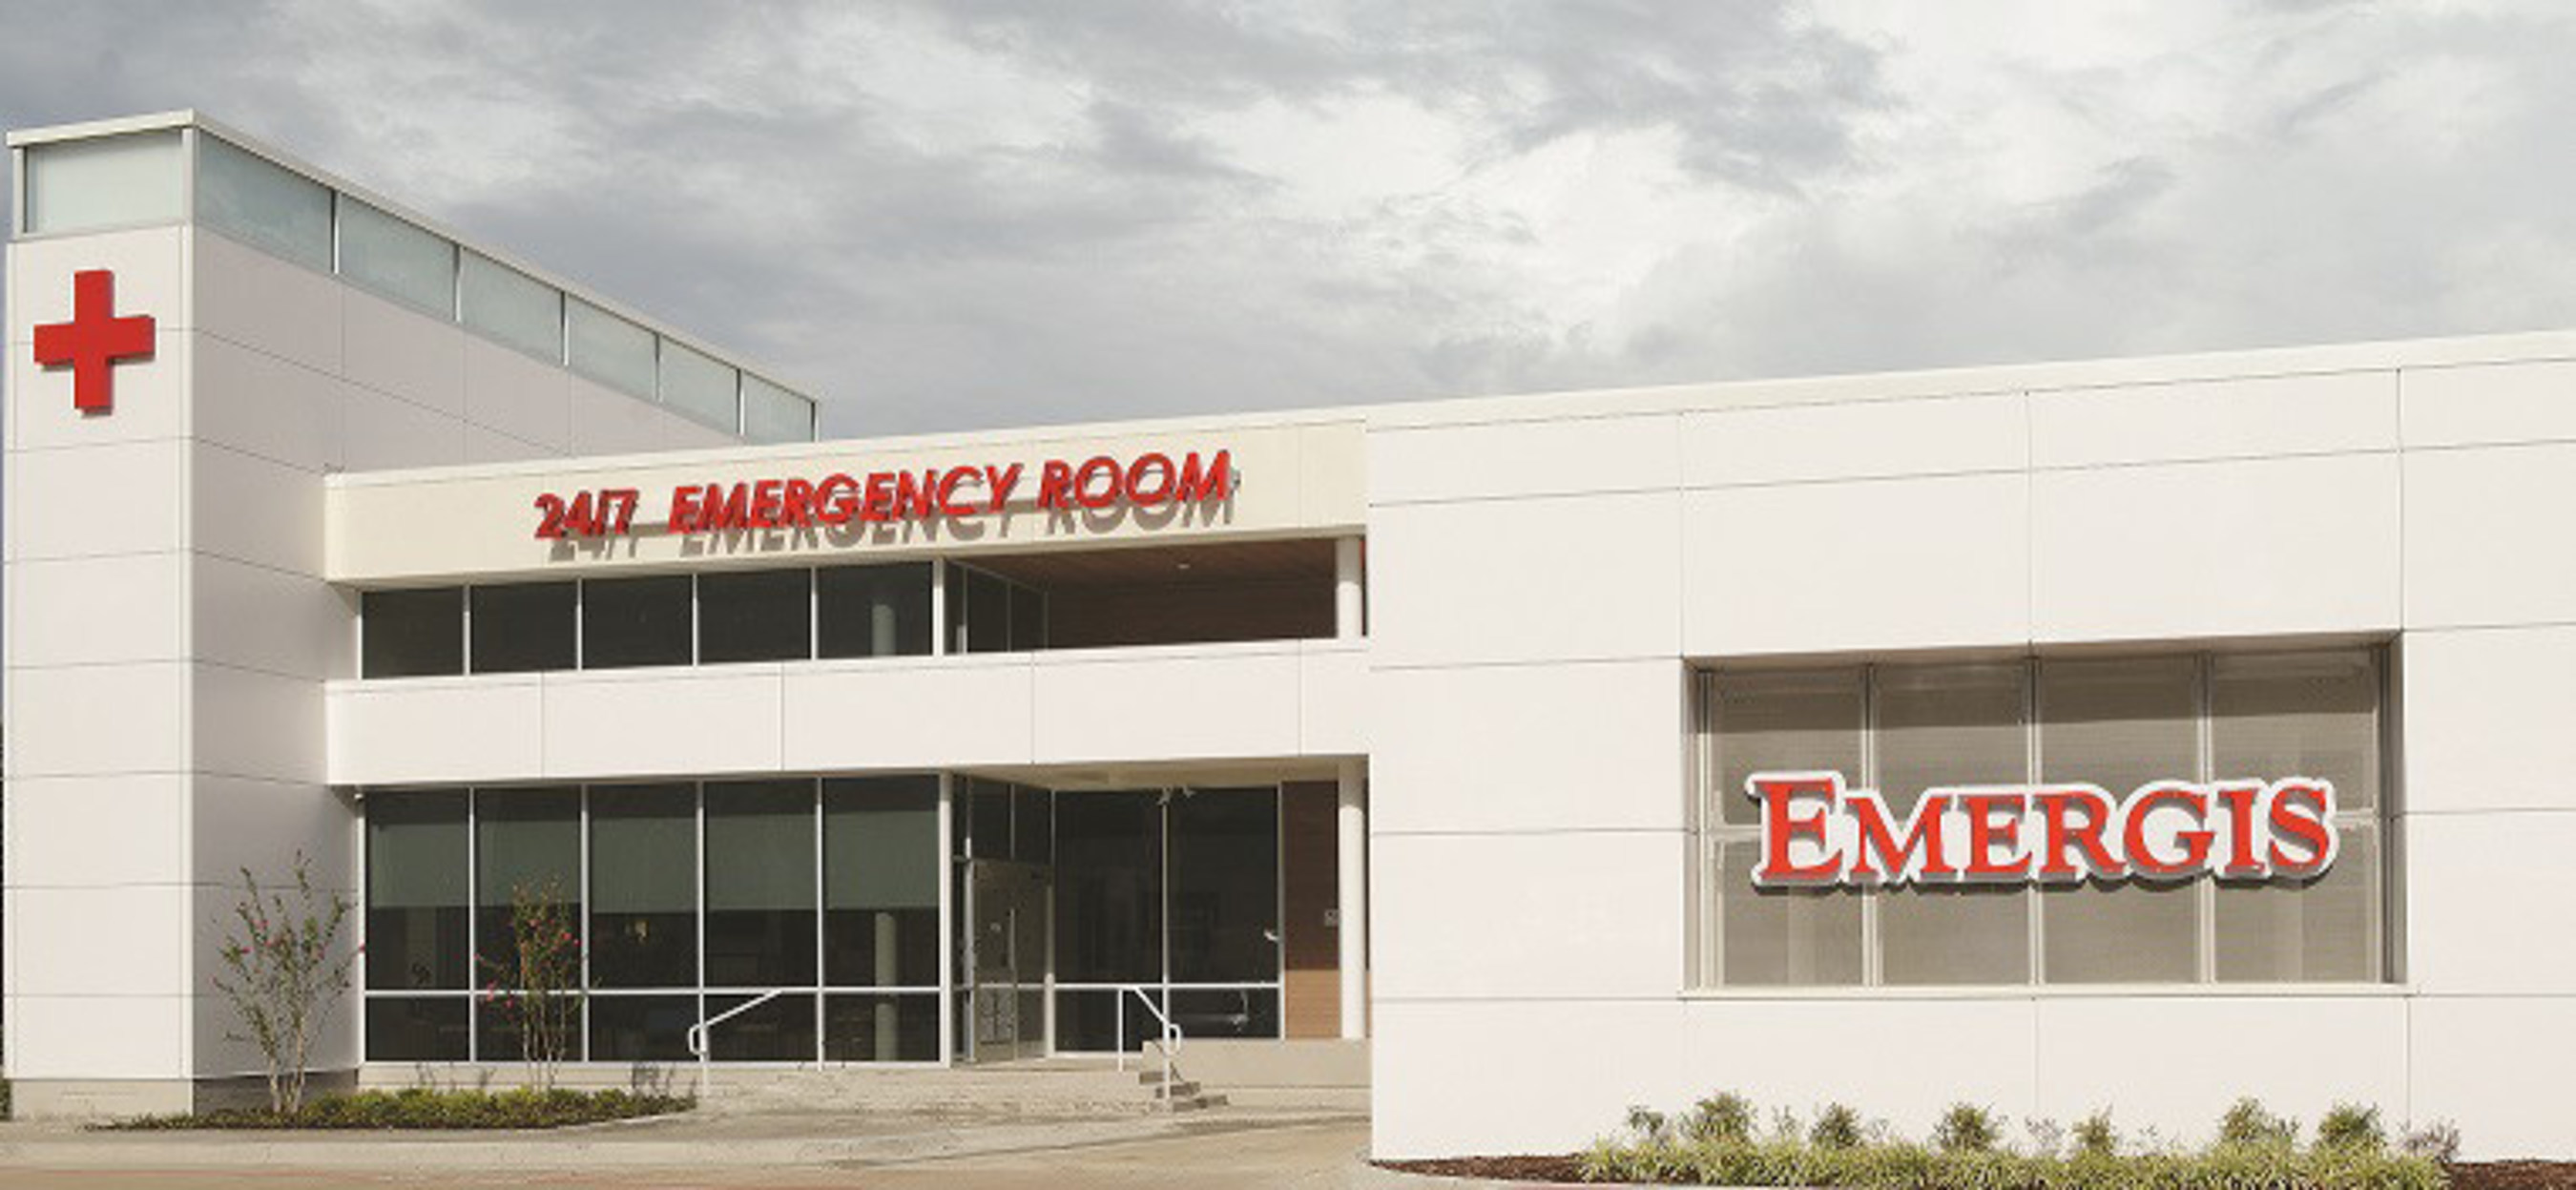 Emergis ER is a new, freestanding emergency room serving Addison, Texas.